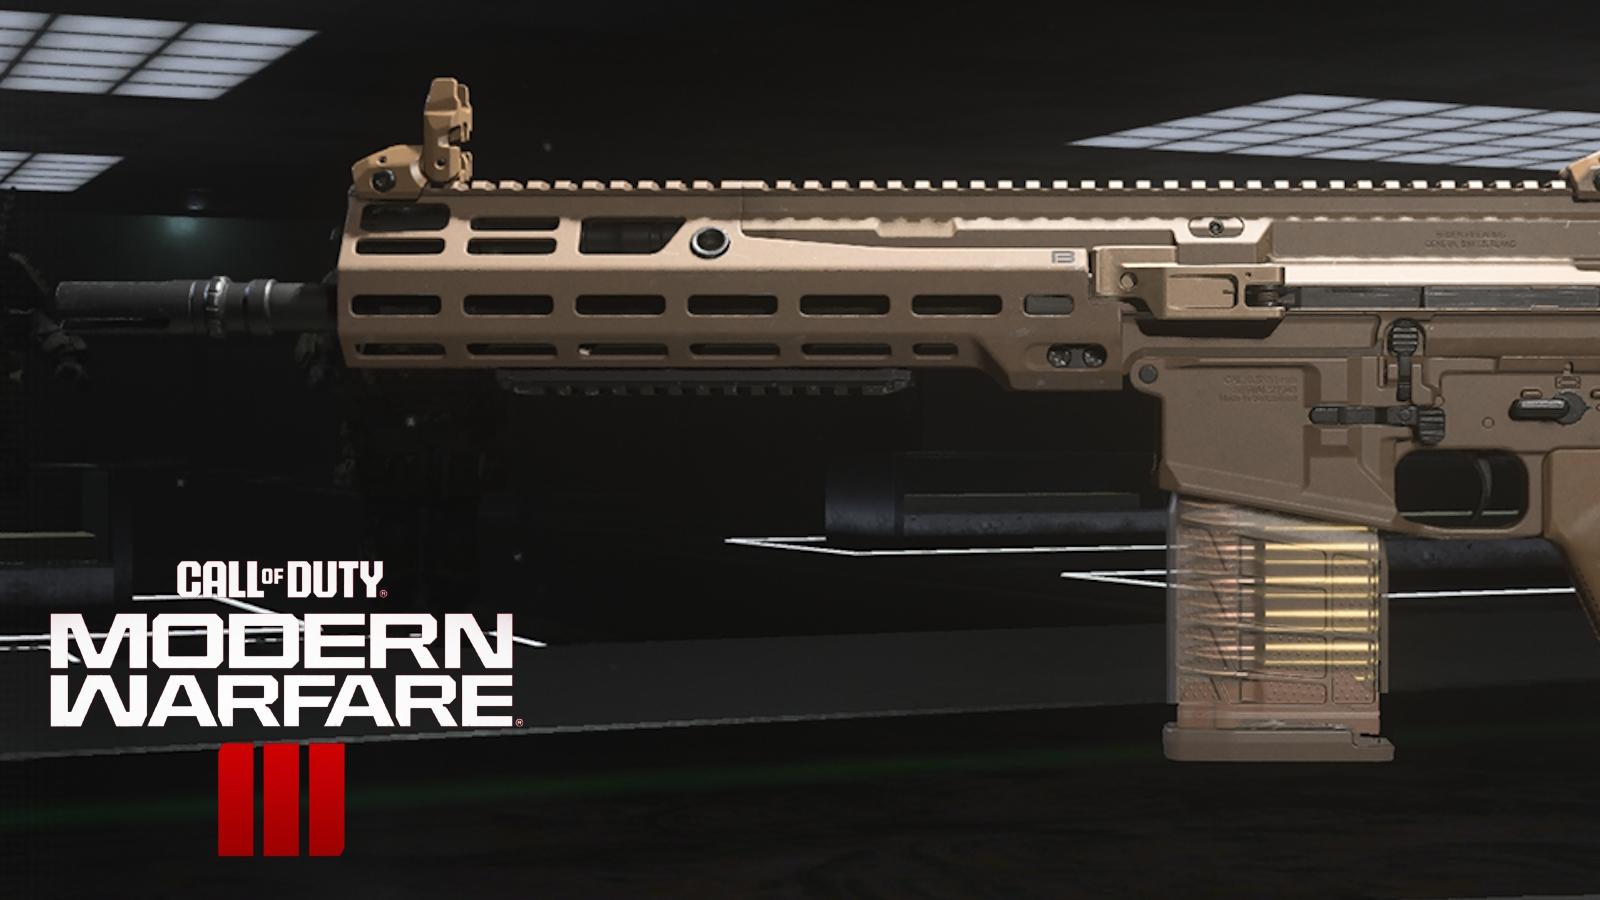 BAS-B battle rifle in Modern Warfare 3 next to game logo.